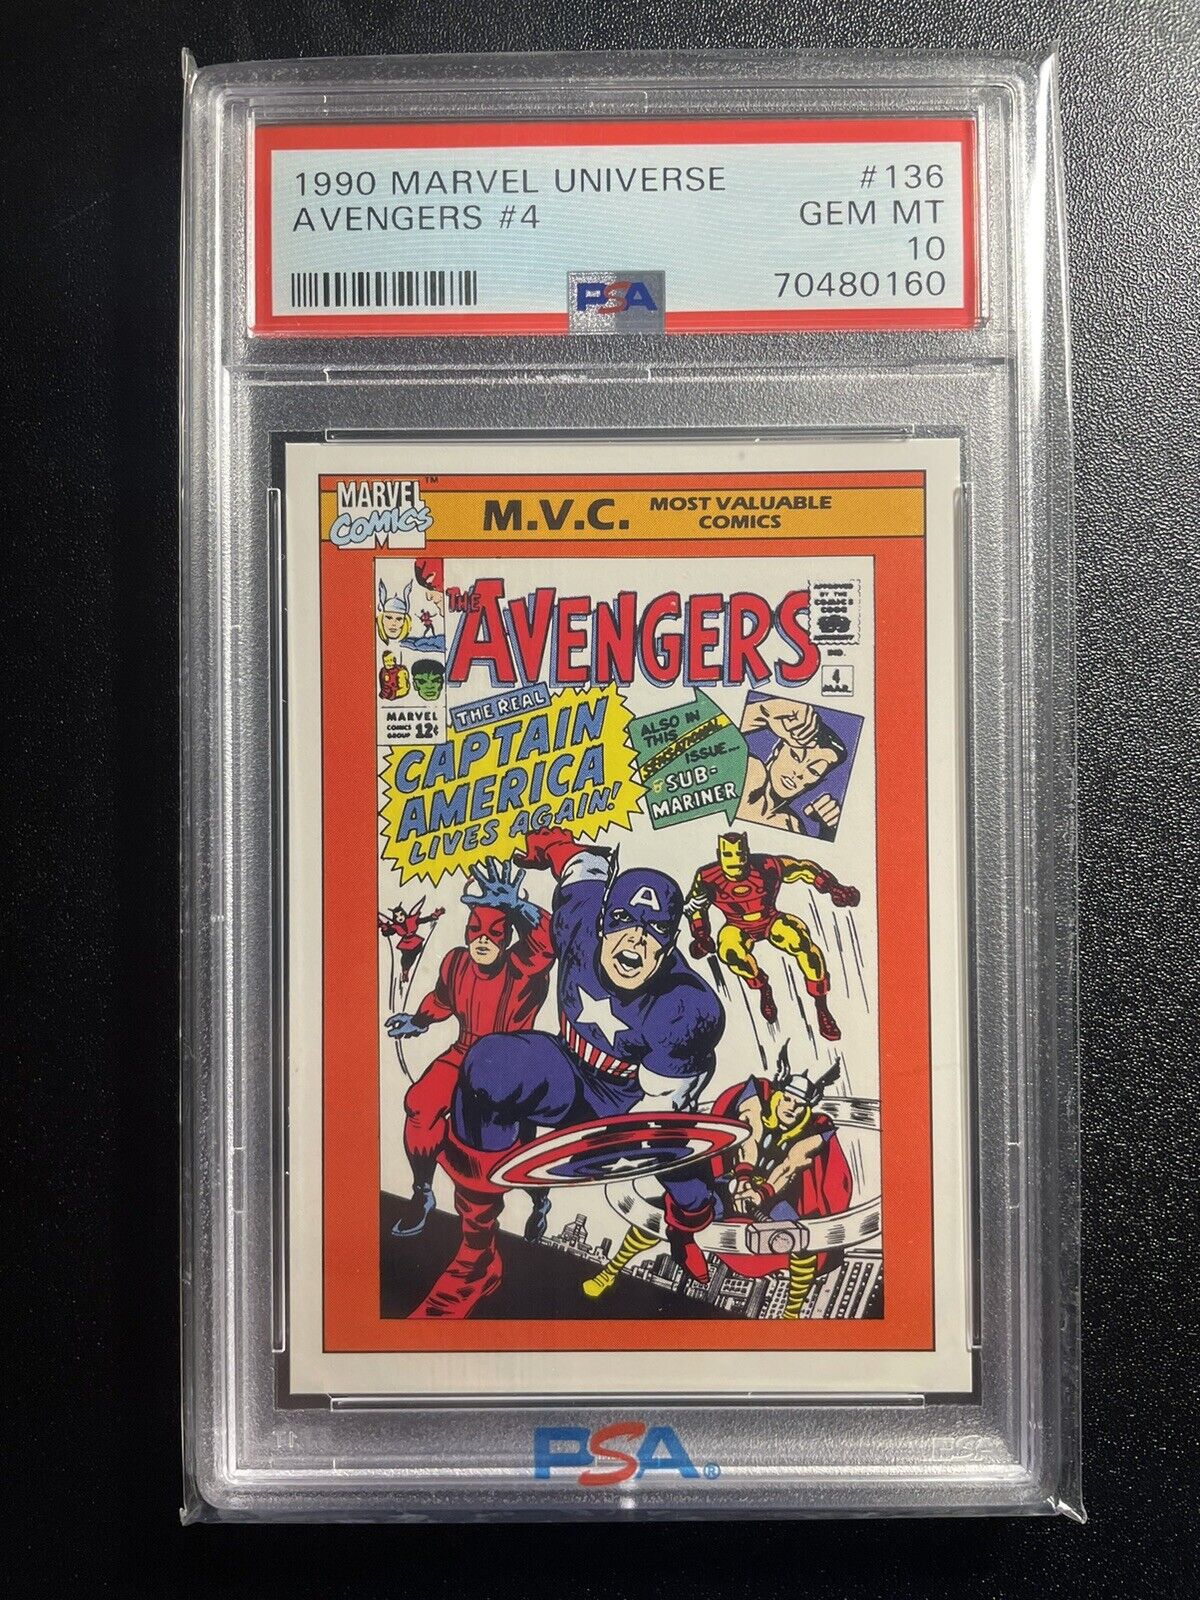 1990 Marvel Universe Avengers #4 #136 PSA 10 GEM MINT